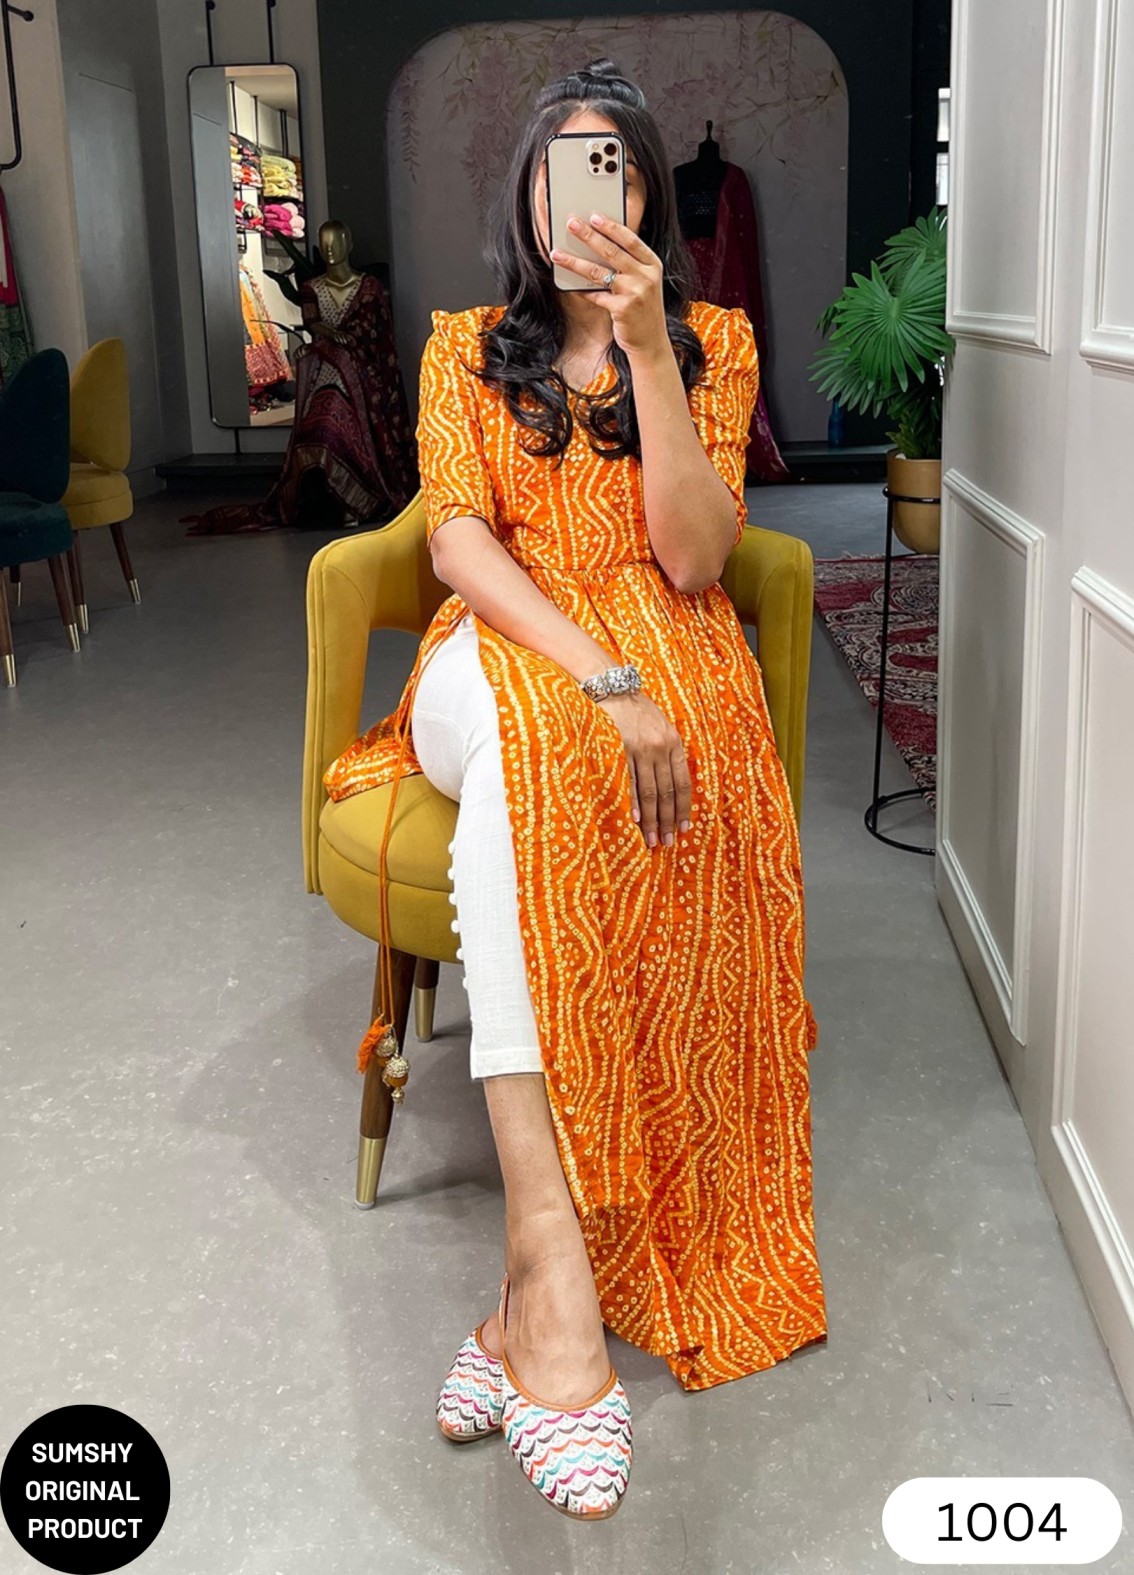 Buy beautiful brown embroidery chanderi silk kurta | Priya Chaudhary